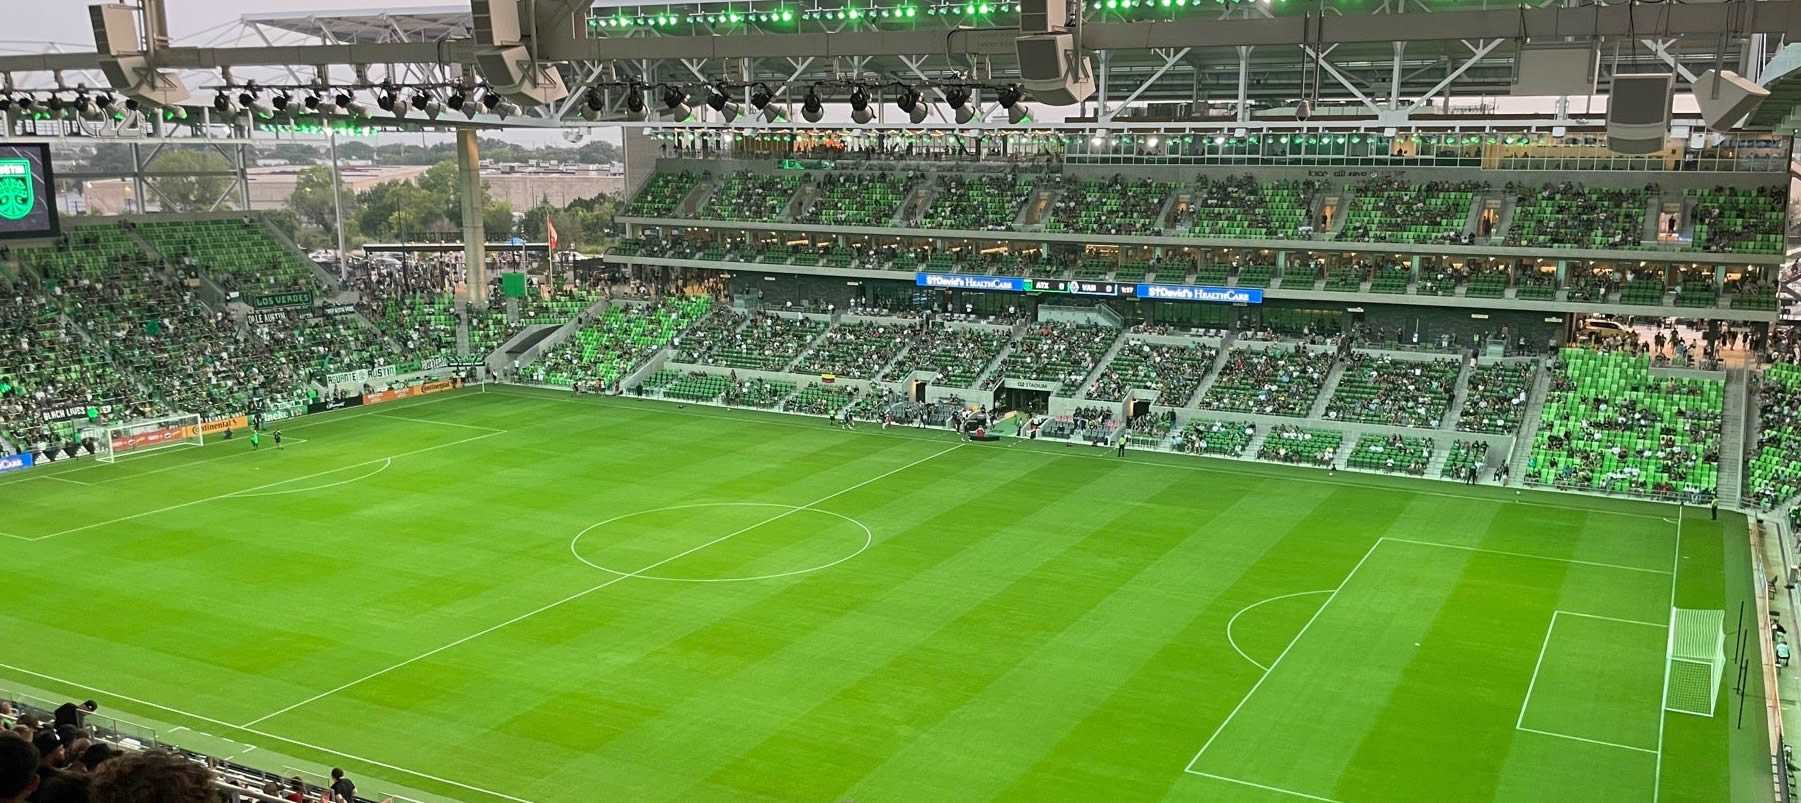 section 309 seat view  - q2 stadium